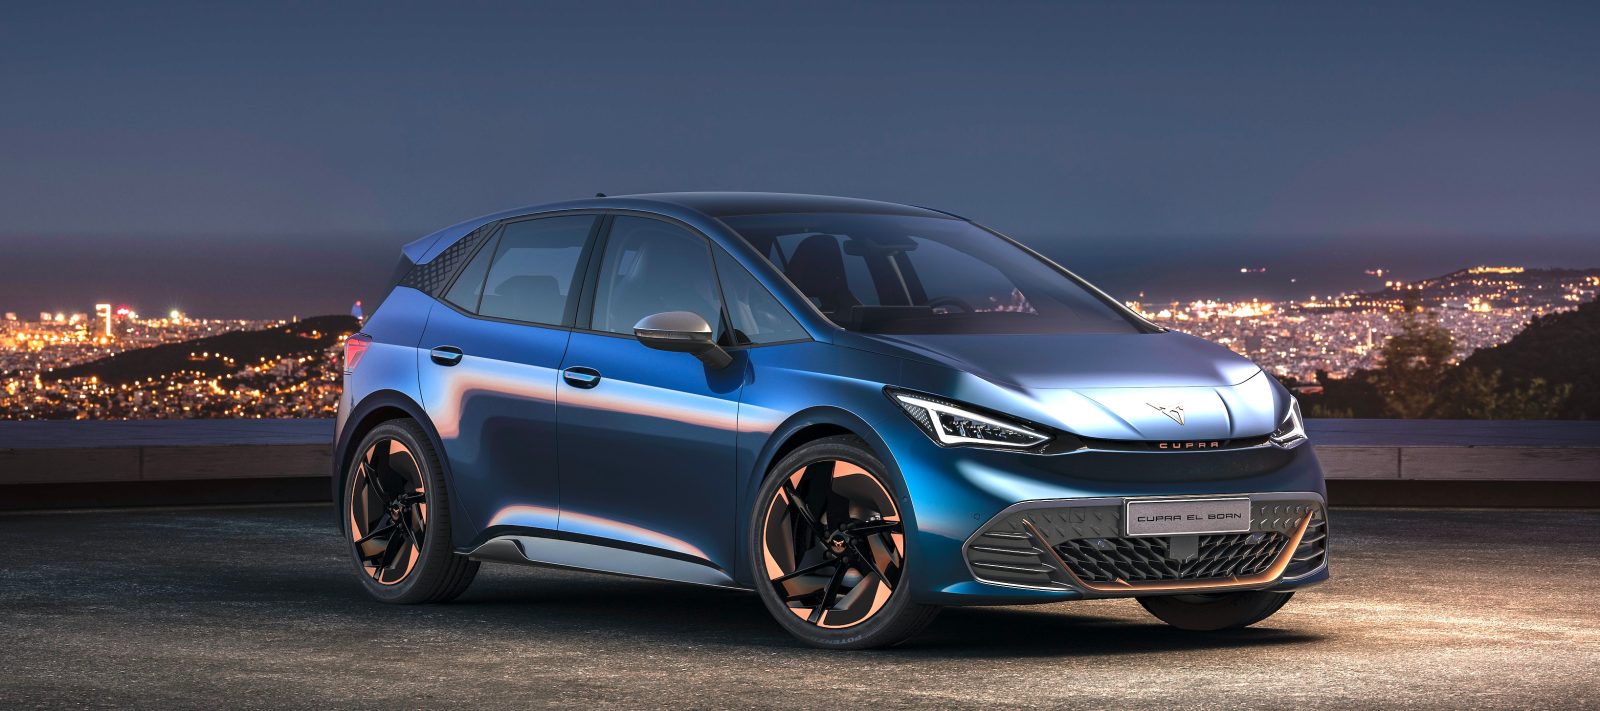 VW's Seat unveils stunning electric hot hatchback: 2021 Cupra el-Born